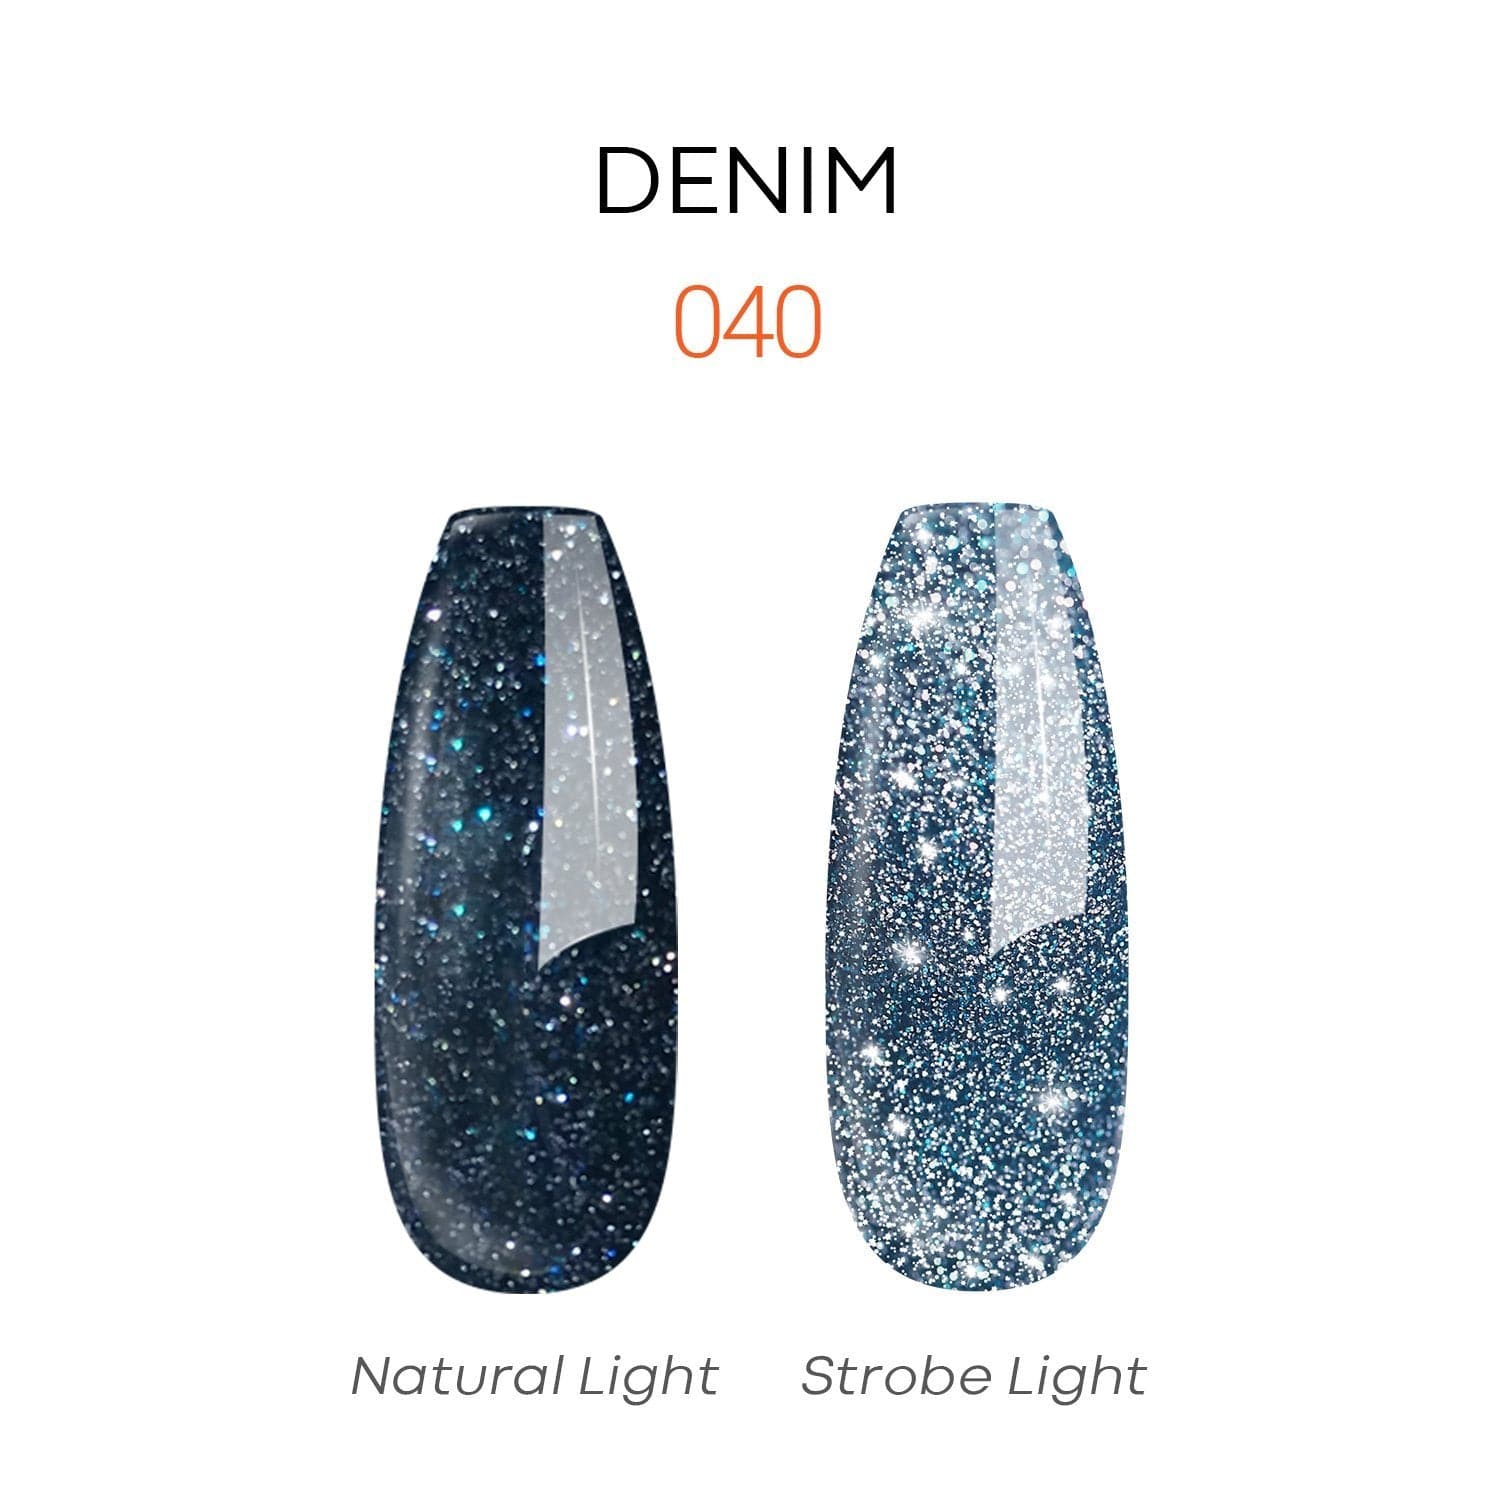 Denim - Reflective Acrylic Powder (1 oz)